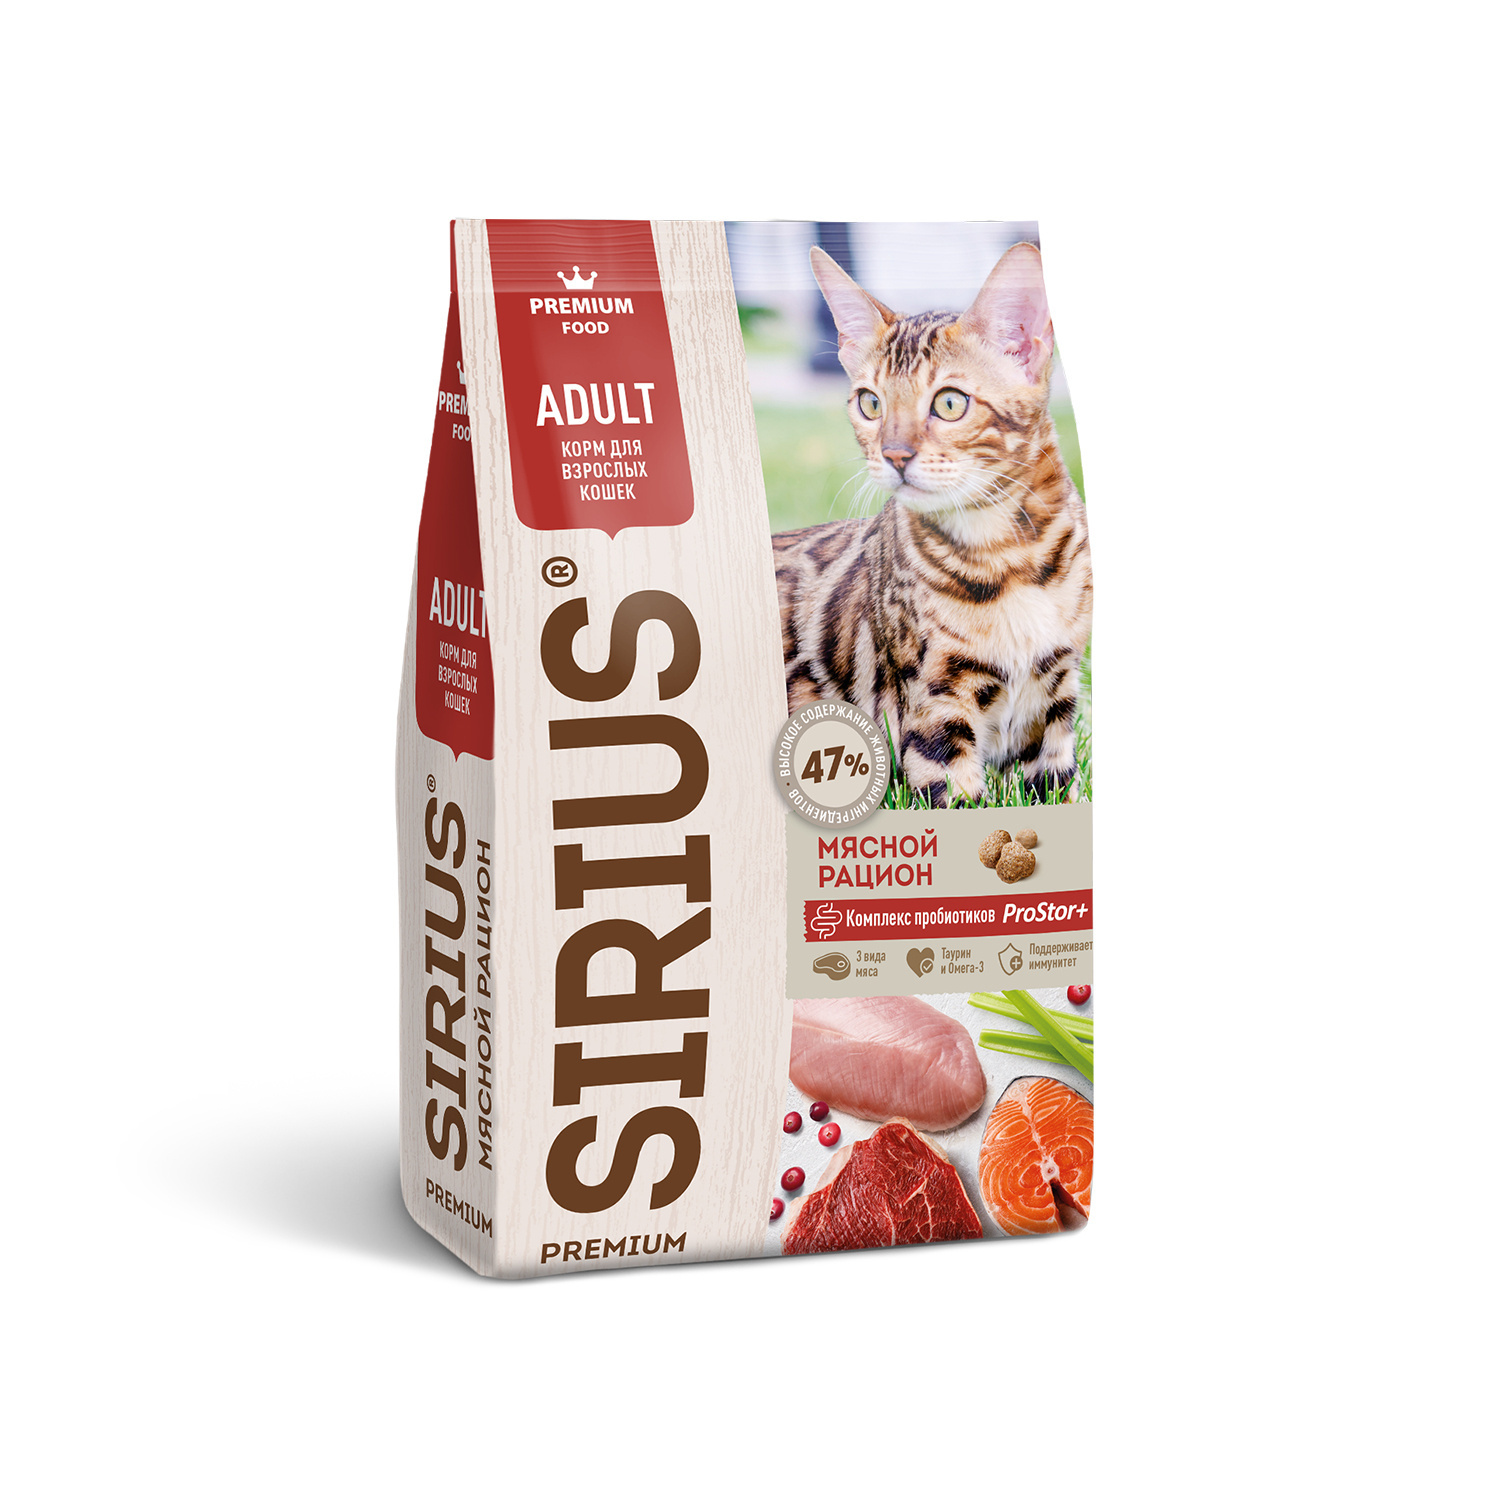 Сириус для кошек 10 кг купить. Sirius корм для стерилизованных кошек. Корм Сириус для котят. Сириус корм для кошек 10 кг. Sirius лосось и рис сухой корм для кошек 10 кг.